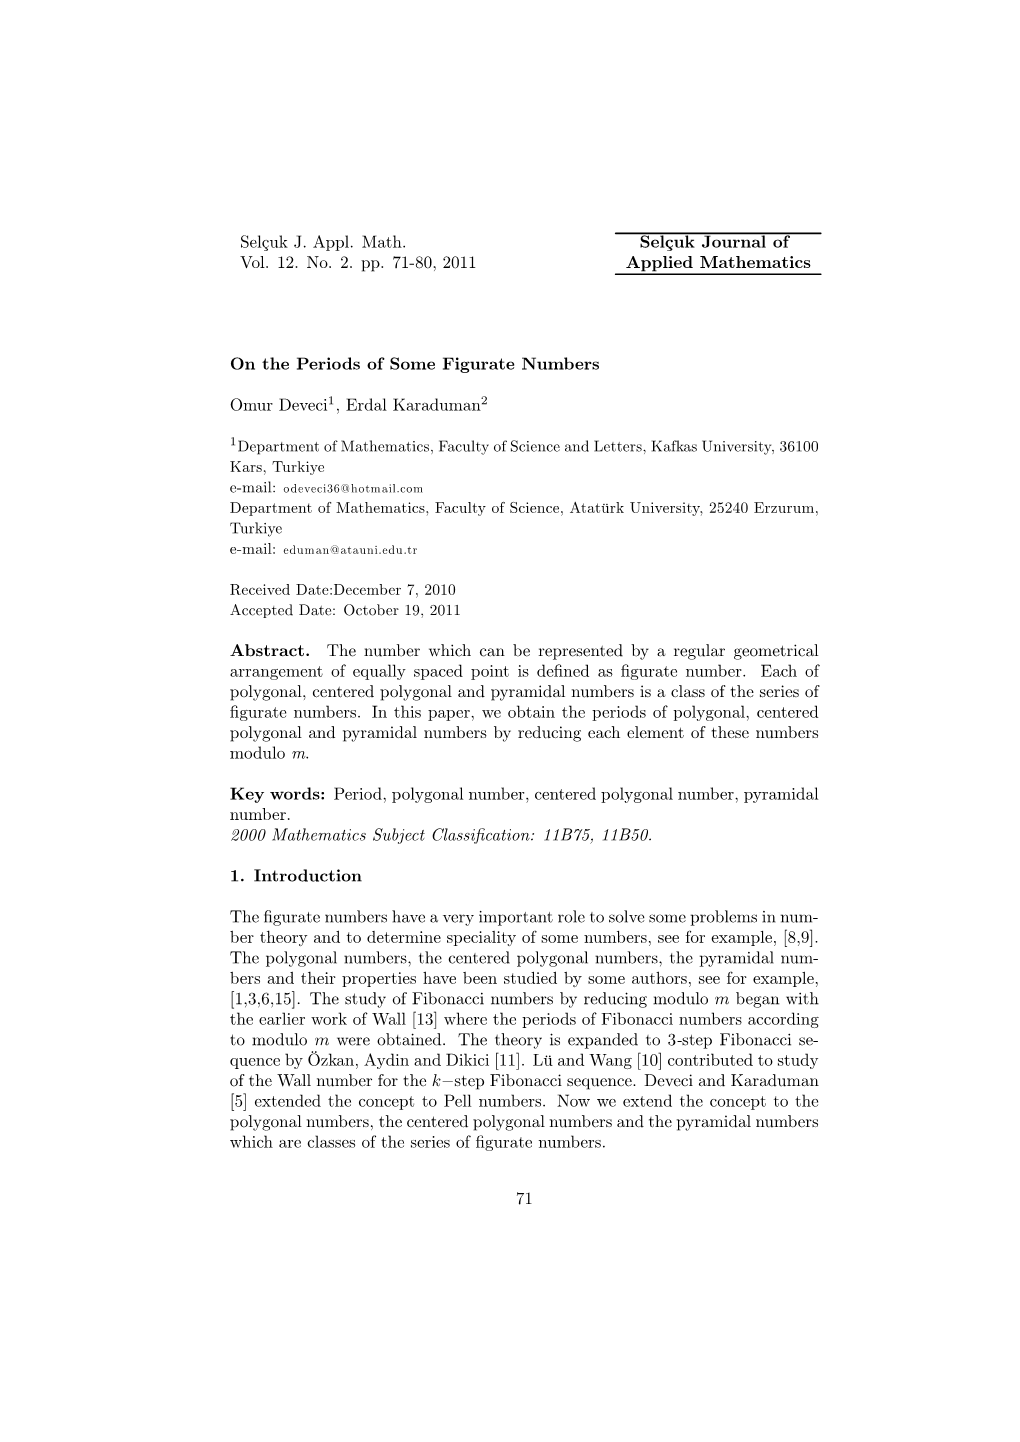 Selçuk J. Appl. Math. Selçuk Journal of Vol. 12. No. 2. Pp. 71-80, 2011 Applied Mathematics